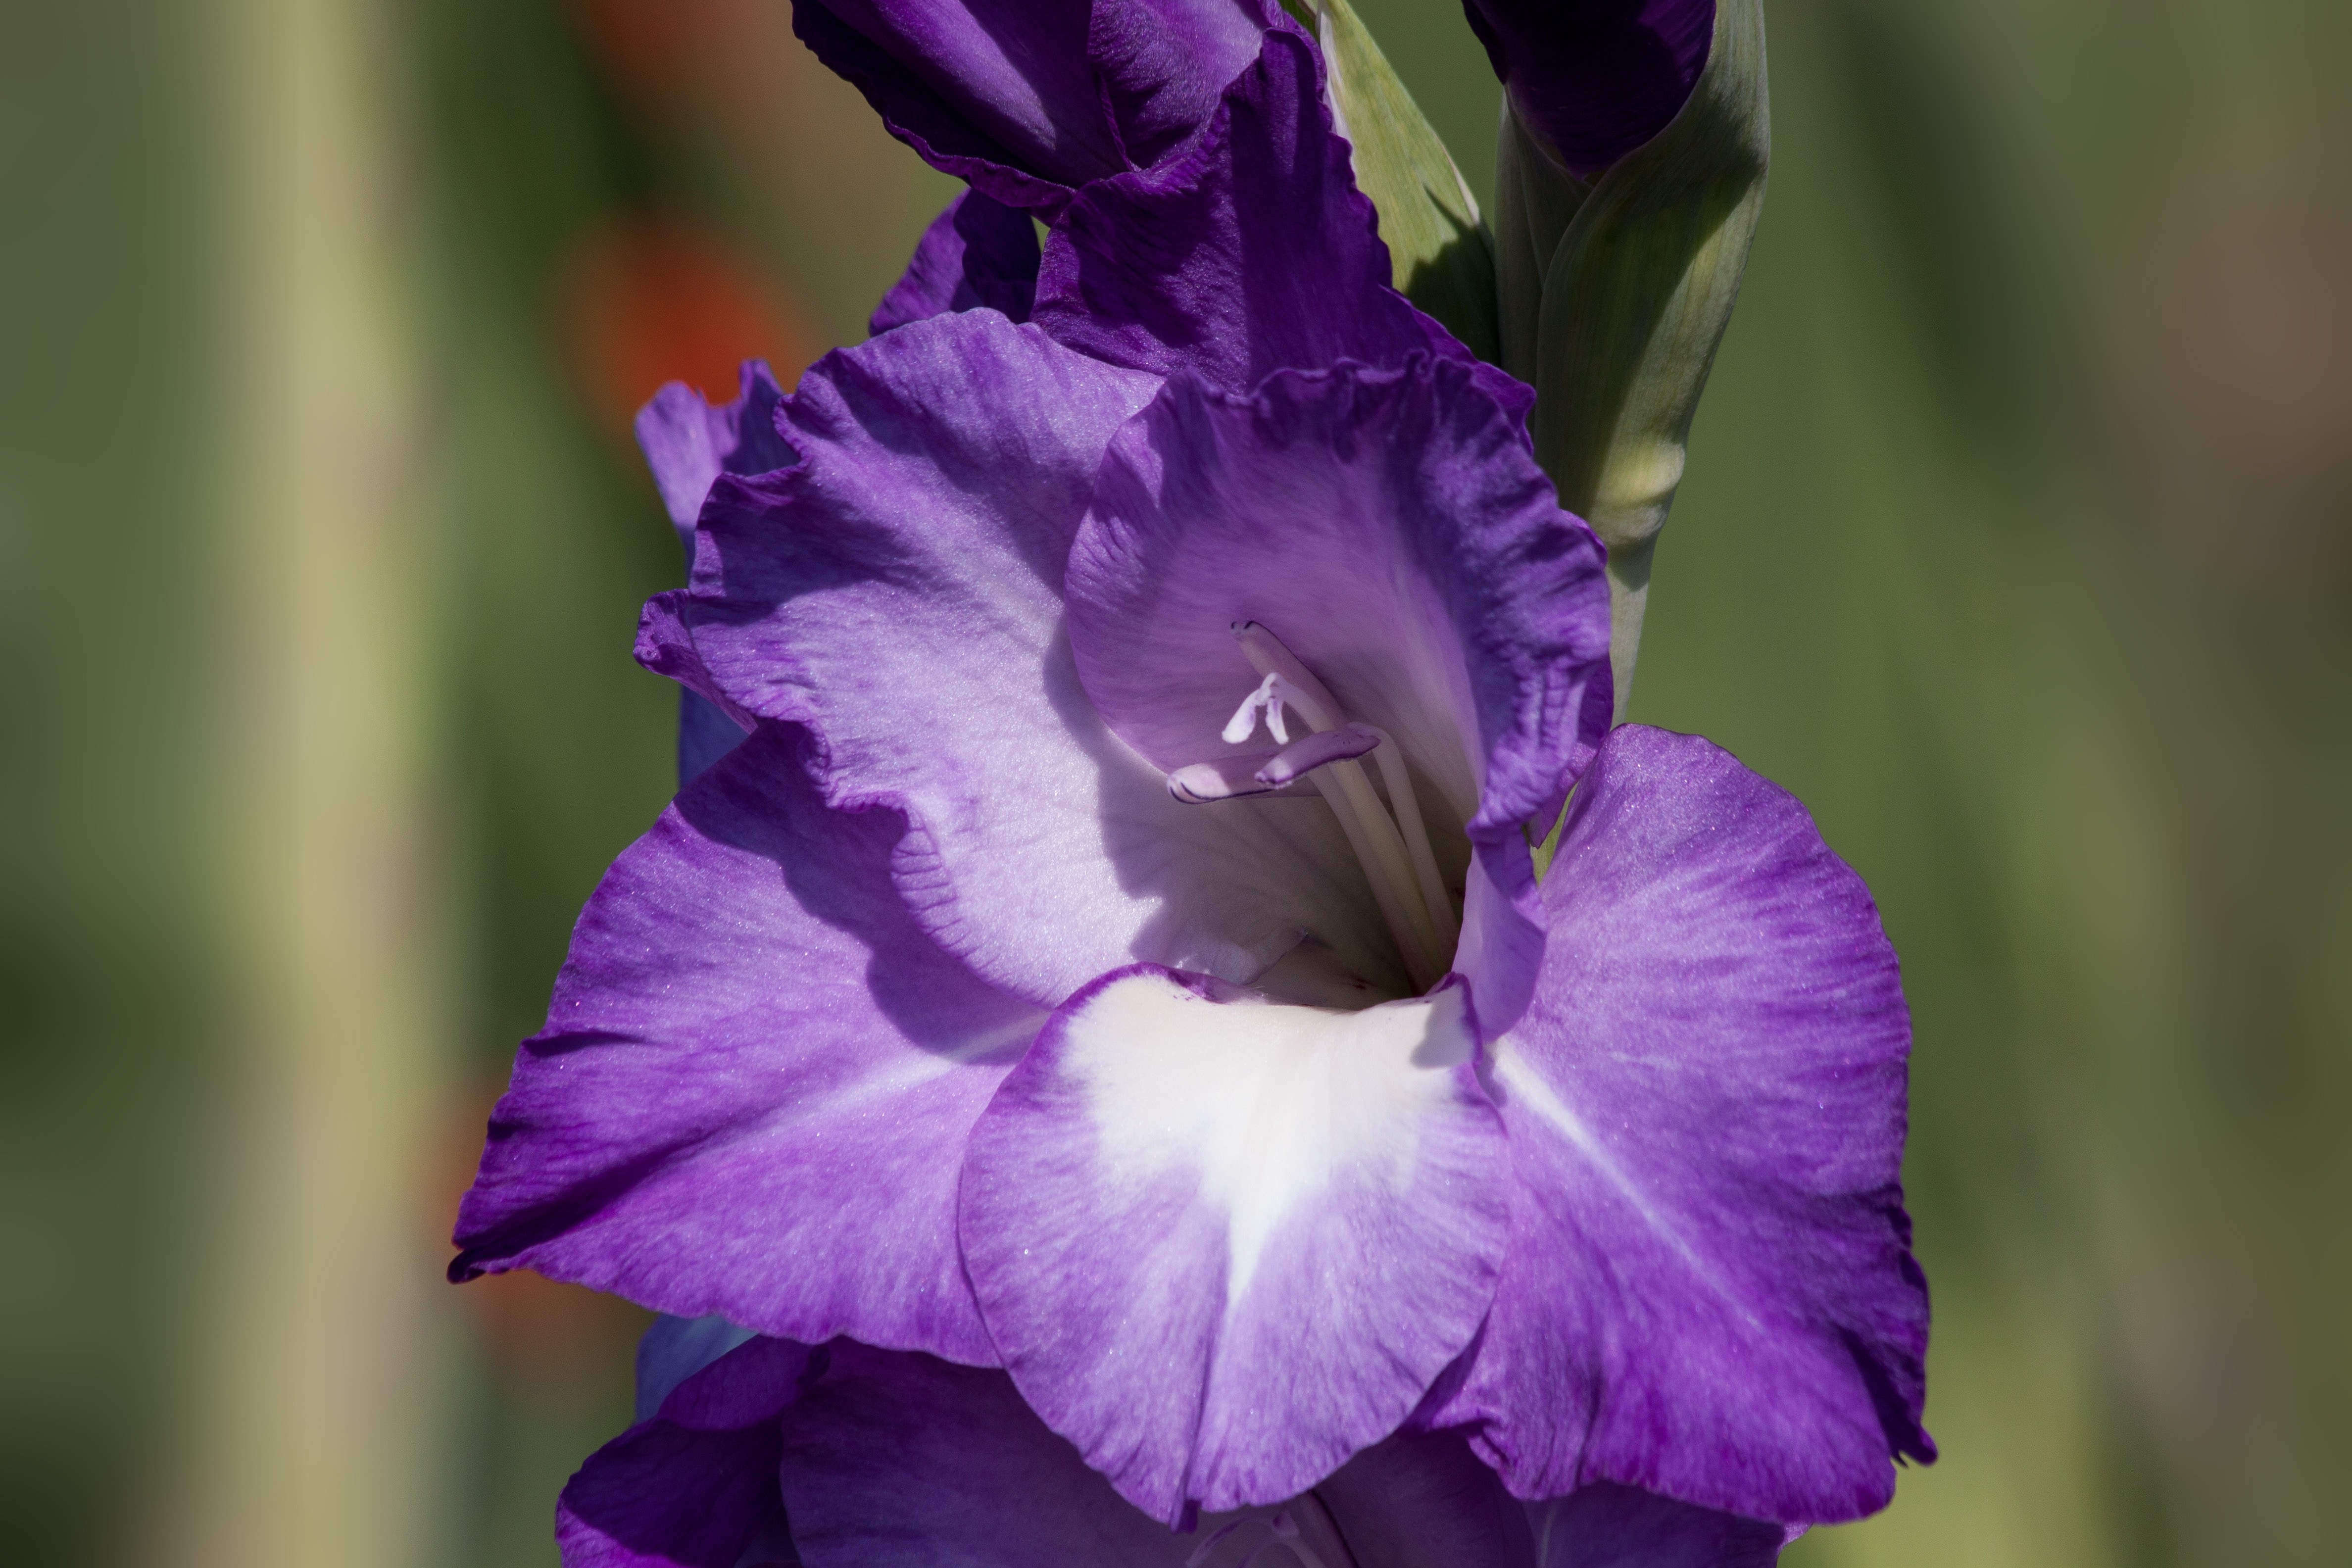 purple gladiolus flower in bloom during daytime